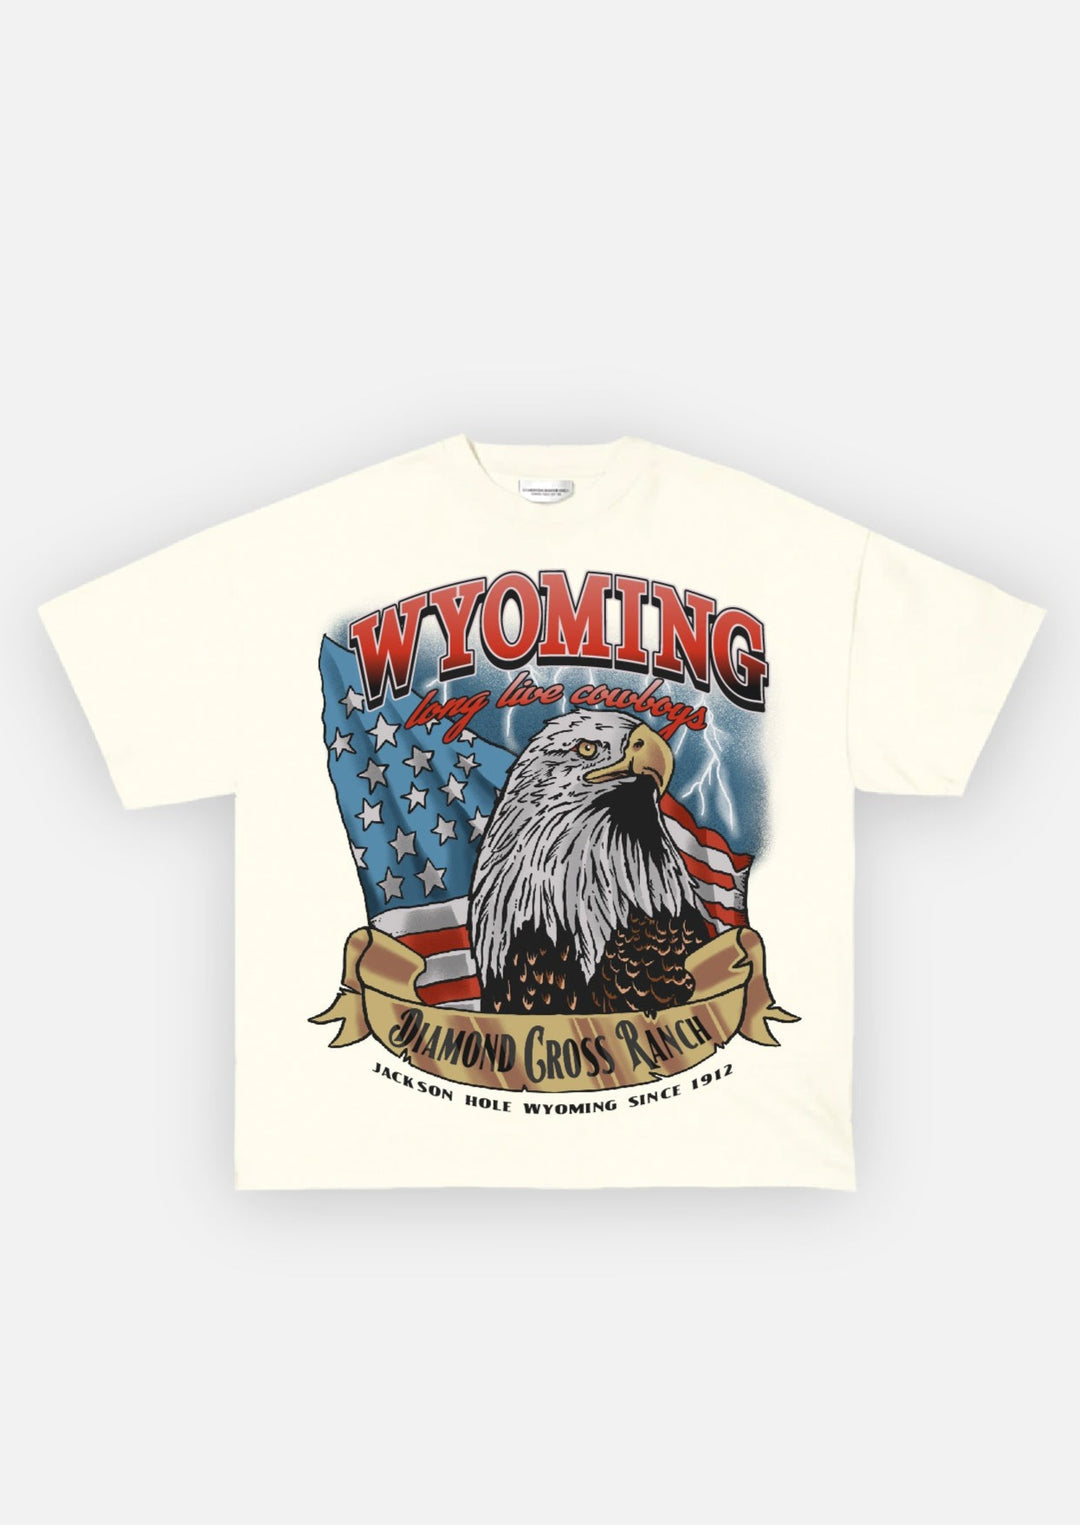 Diamond Cross Ranch Yellowstone Wyoming Wilderness Eagle White T-Shirt 